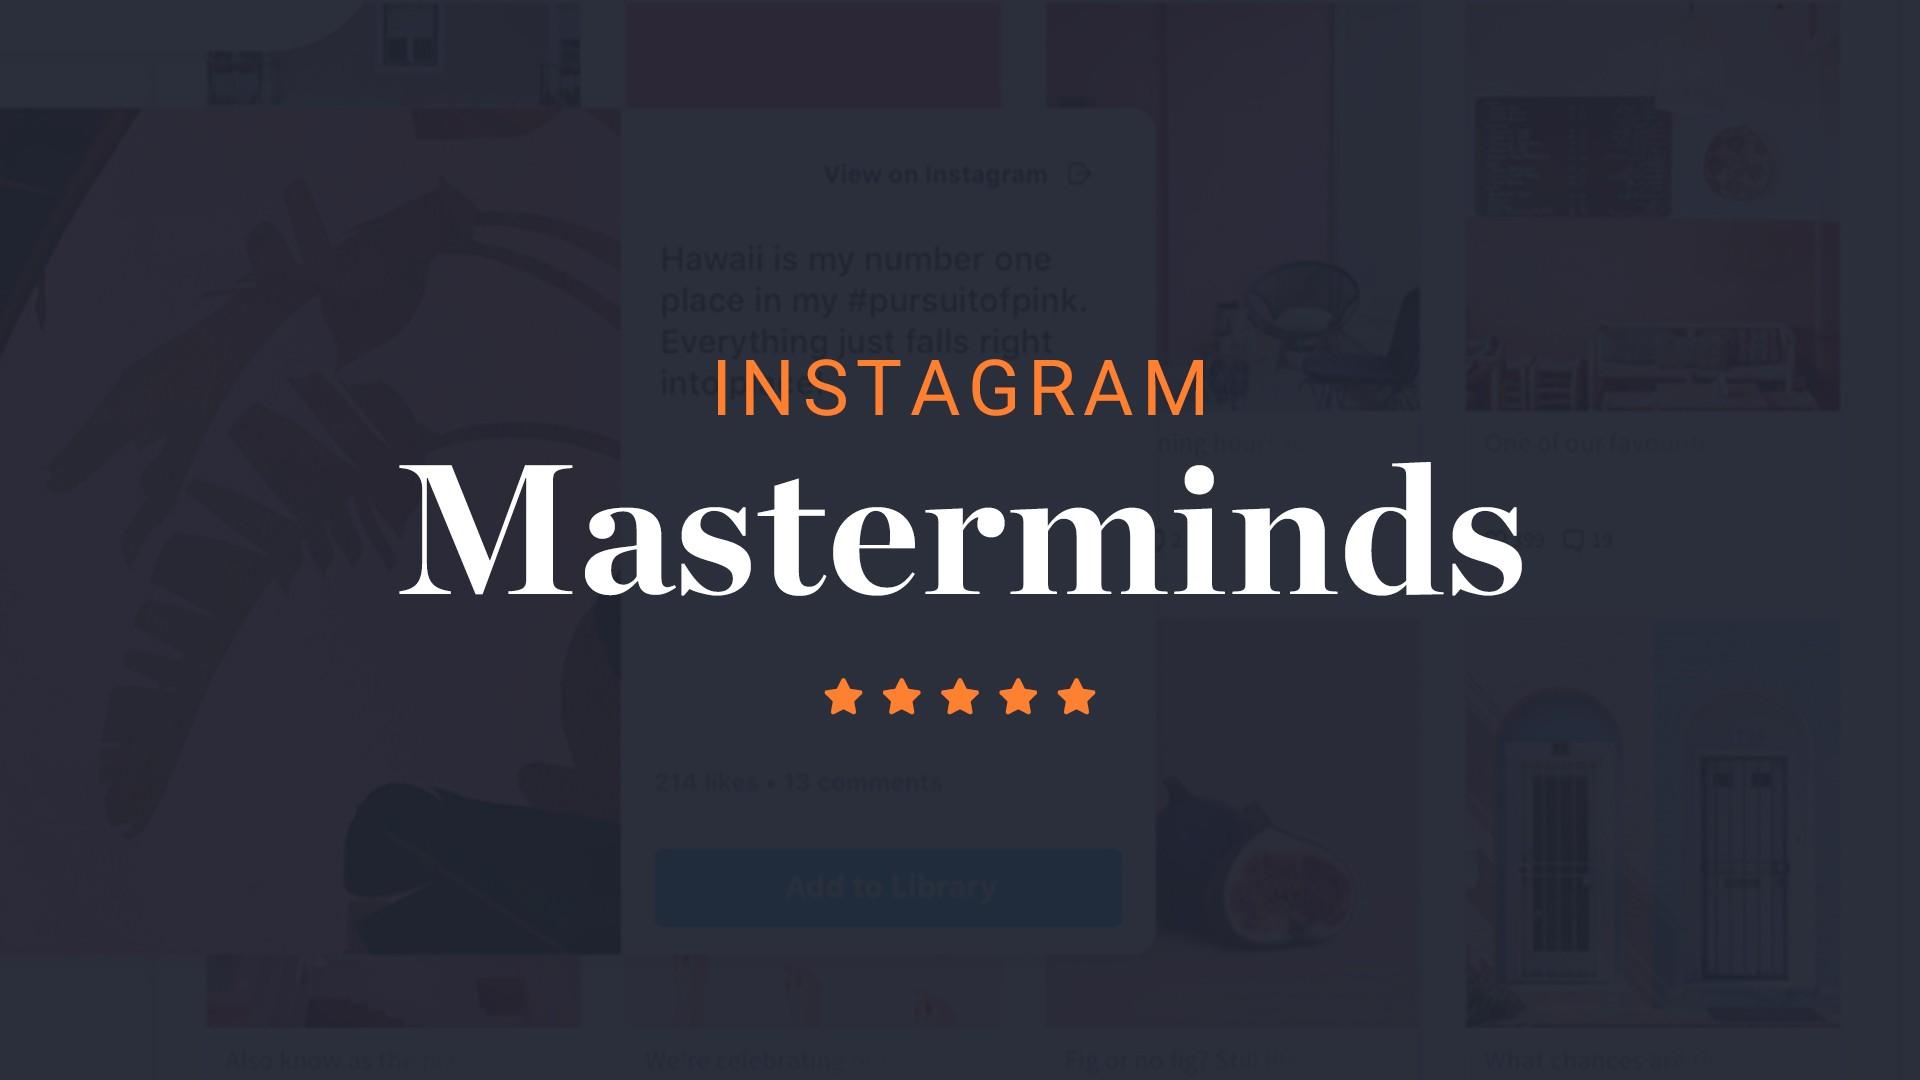 Aaron Ward - Instagram Masterminds